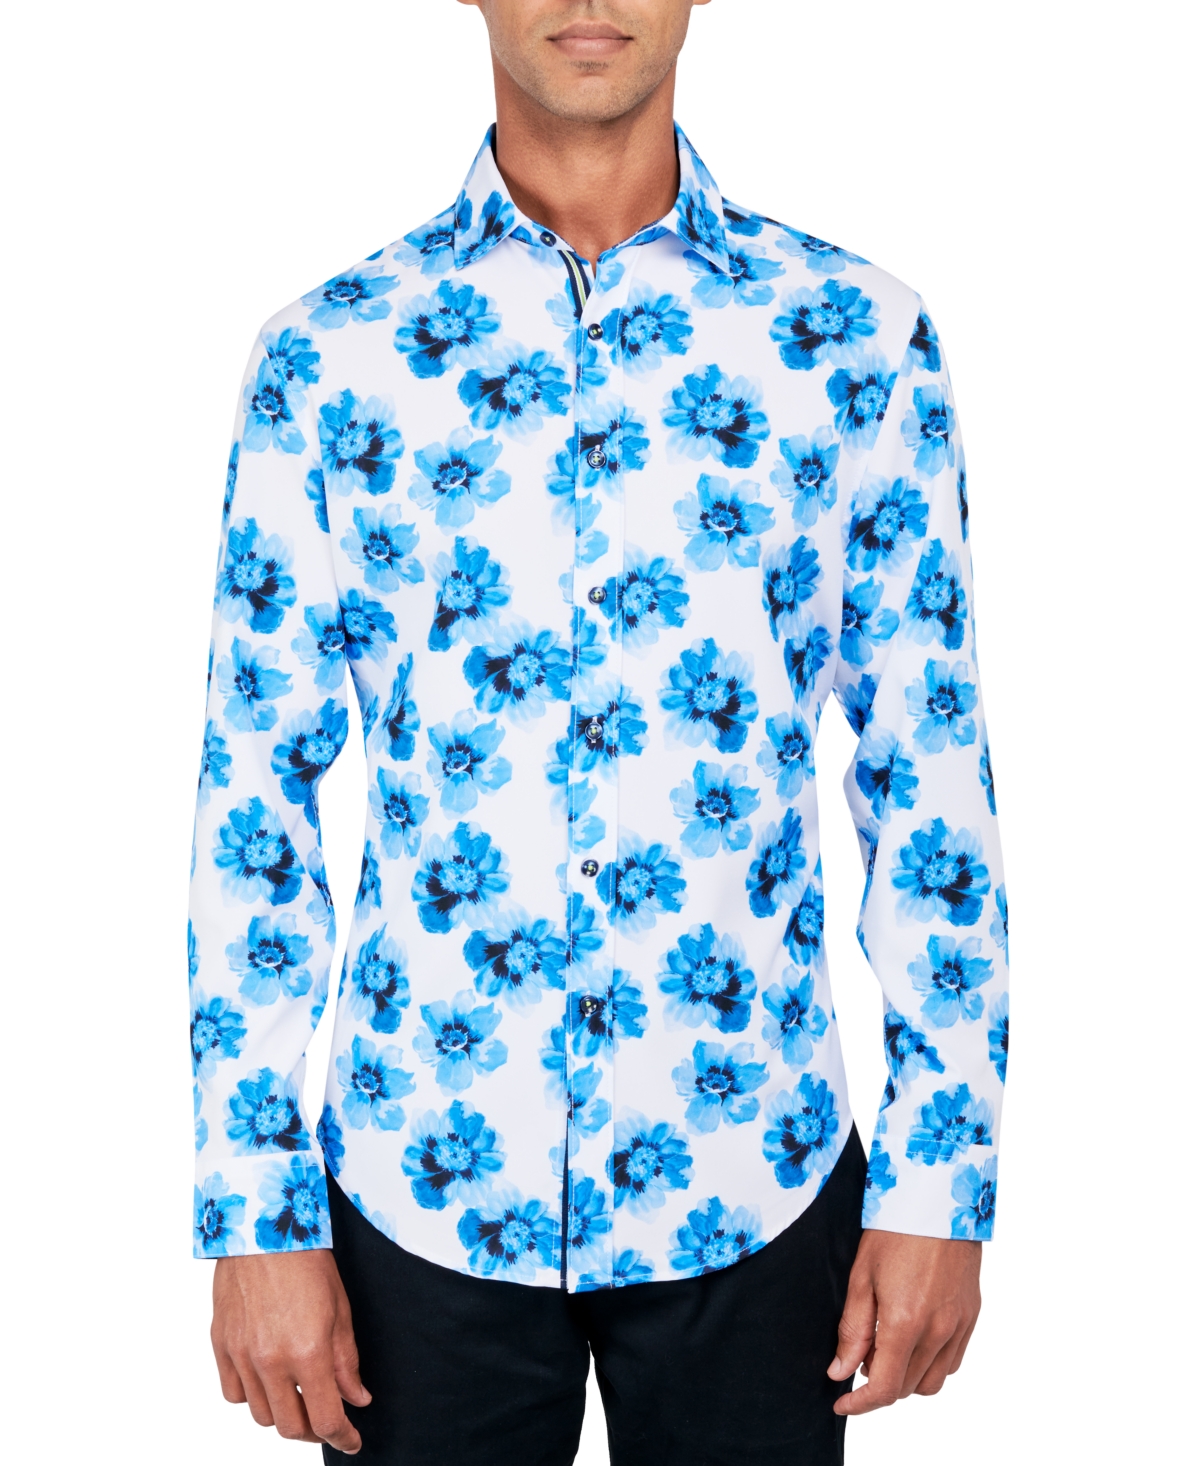 Men's Regular-Fit Non-Iron Performance Stretch Floral-Print Button-Down Shirt - Blue